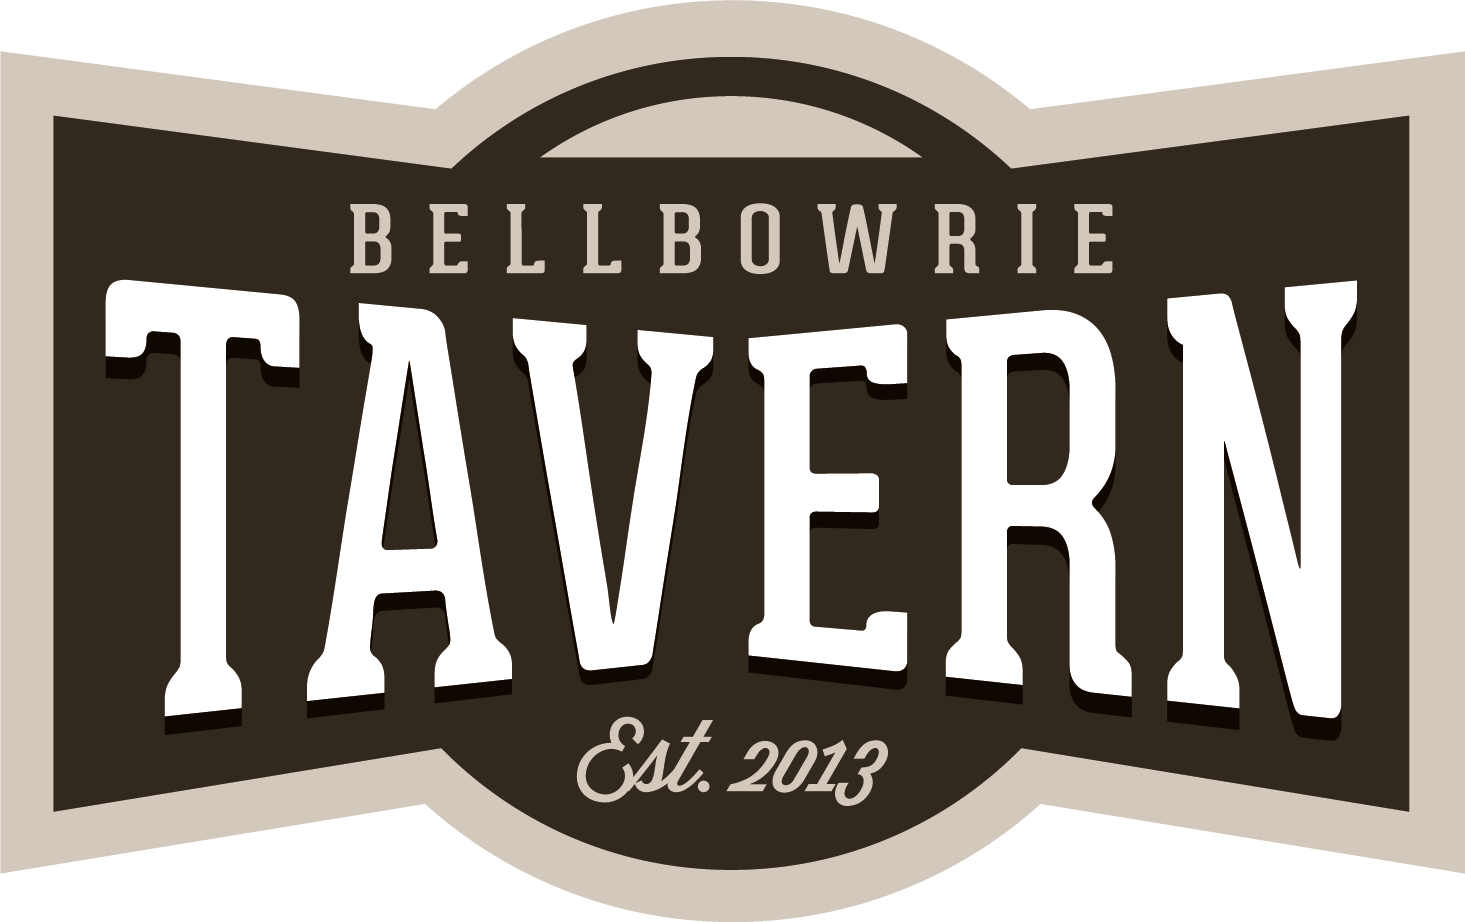 Bellbowrie Tavern, Bellbowrie, QLD